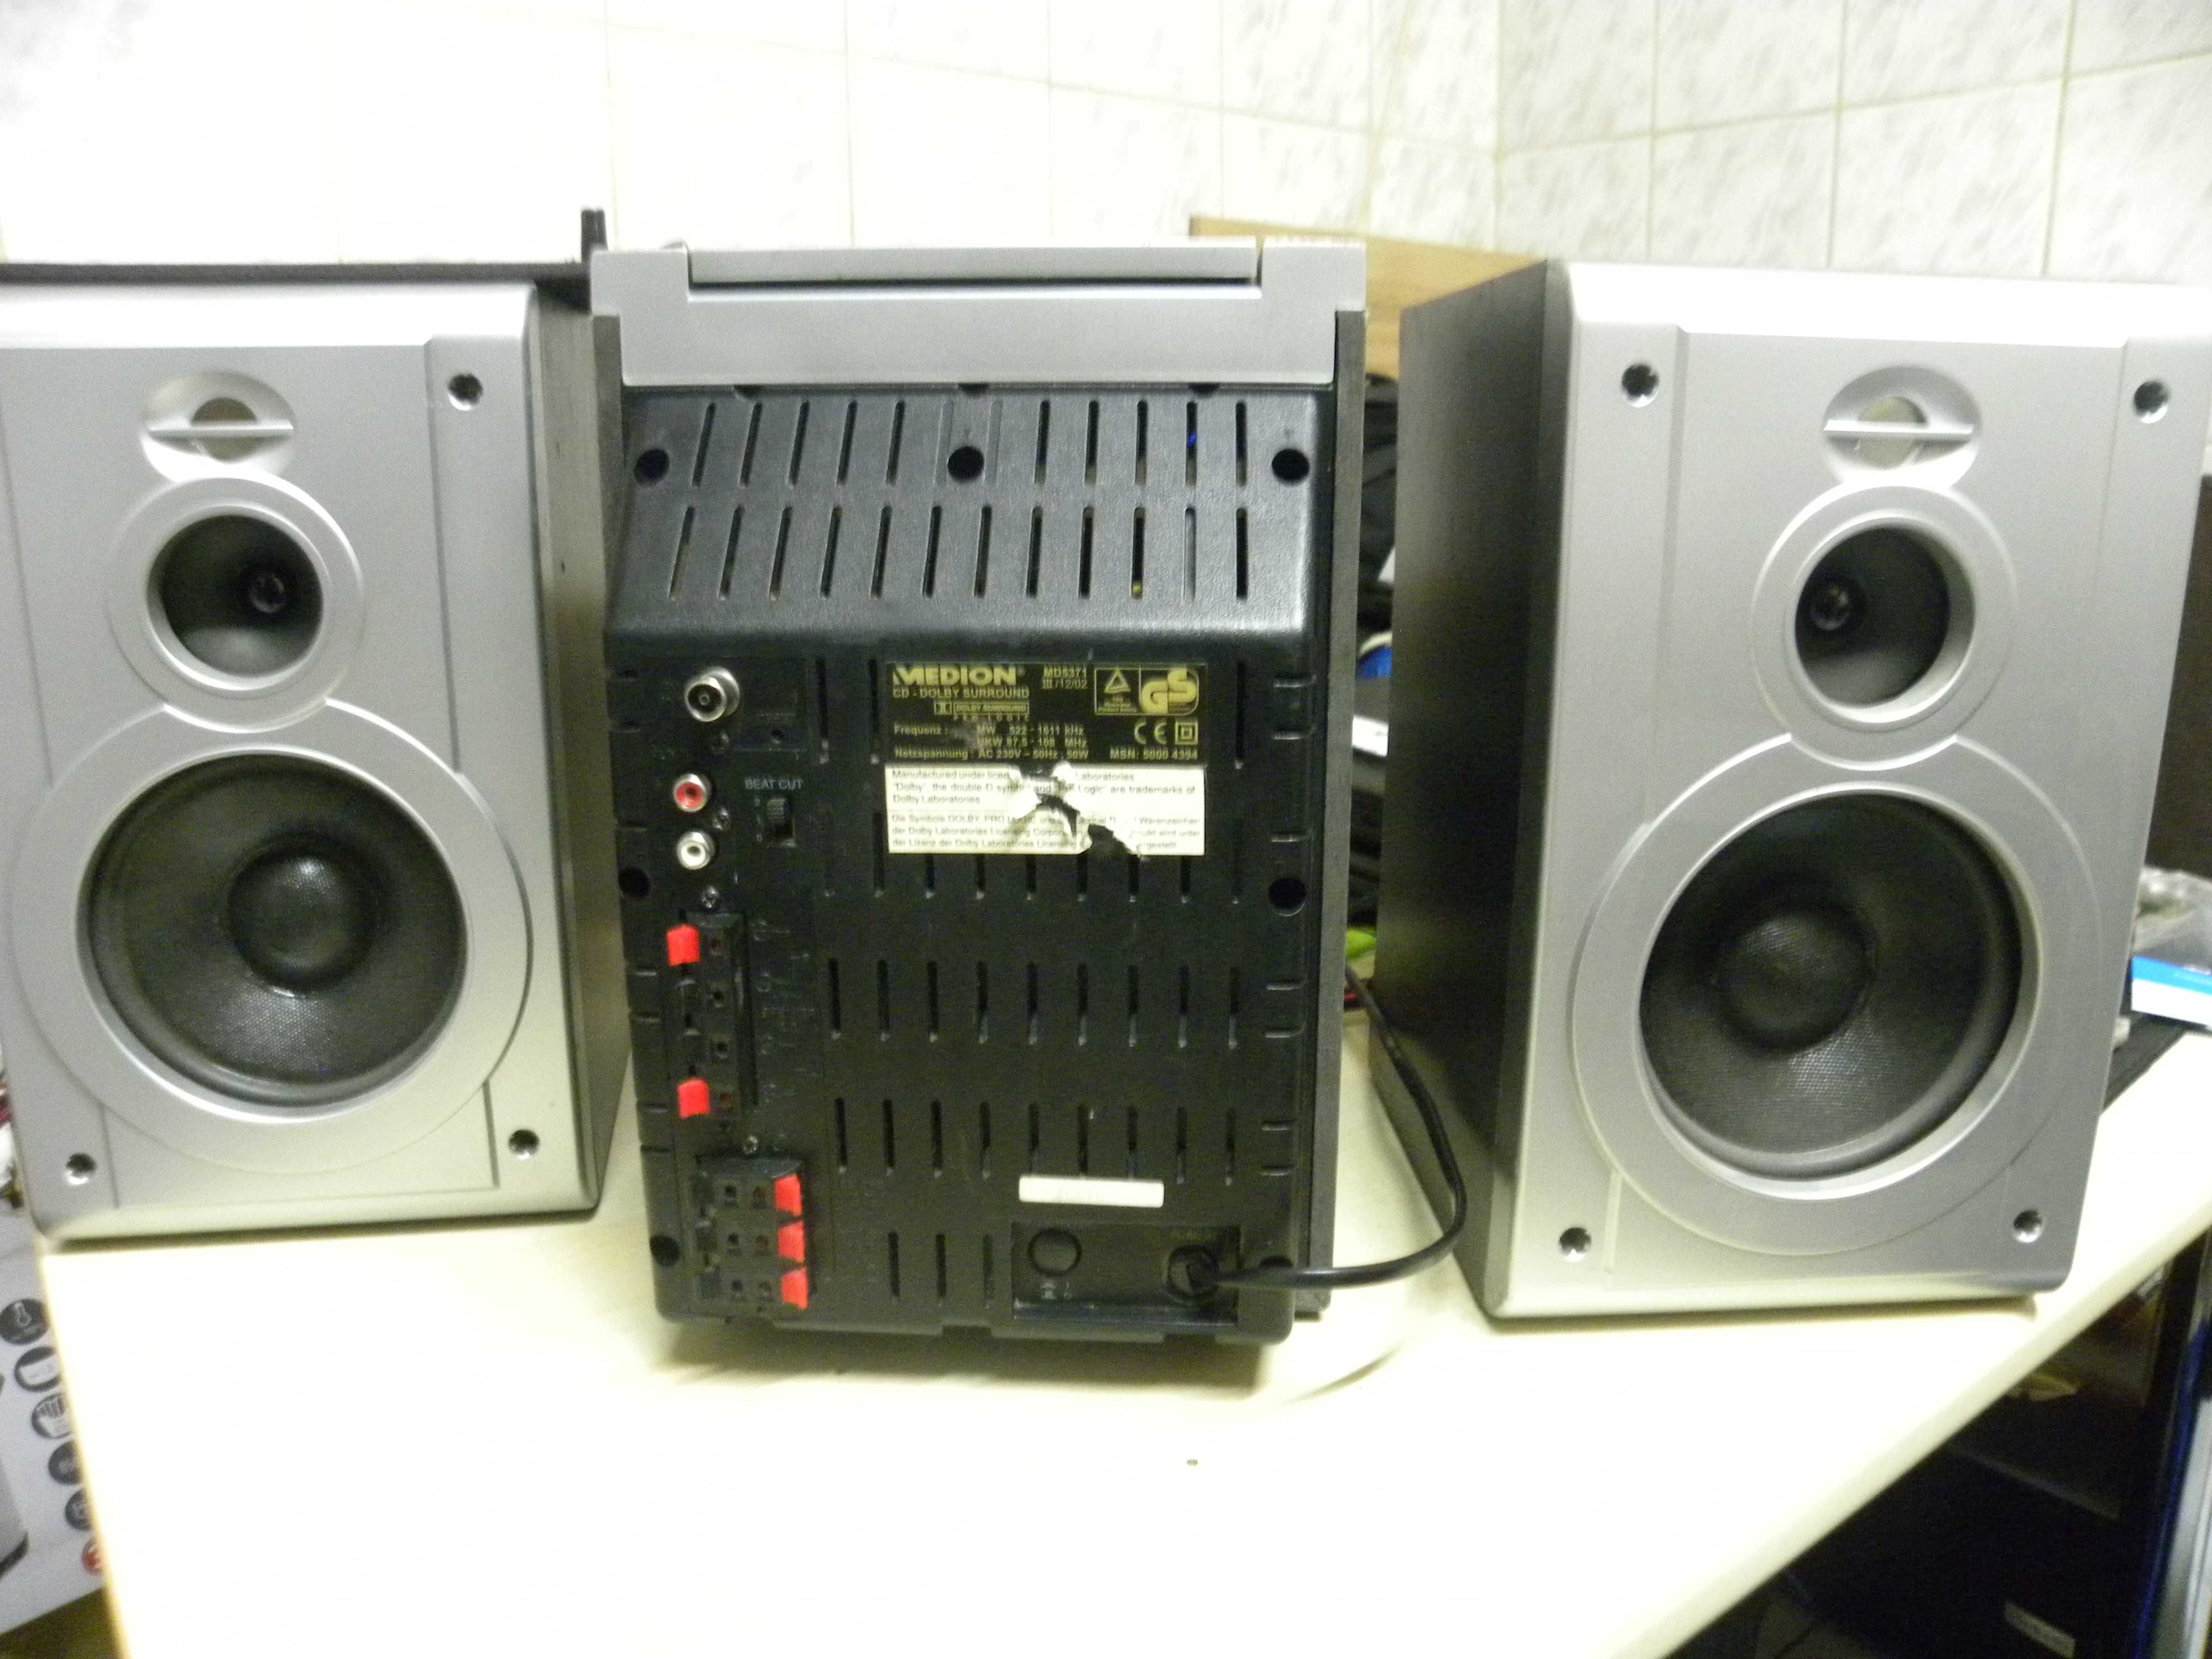 Medion Dolby Surround Anlage MD 5371 PRO LOGIC CD/Tape/Tuner